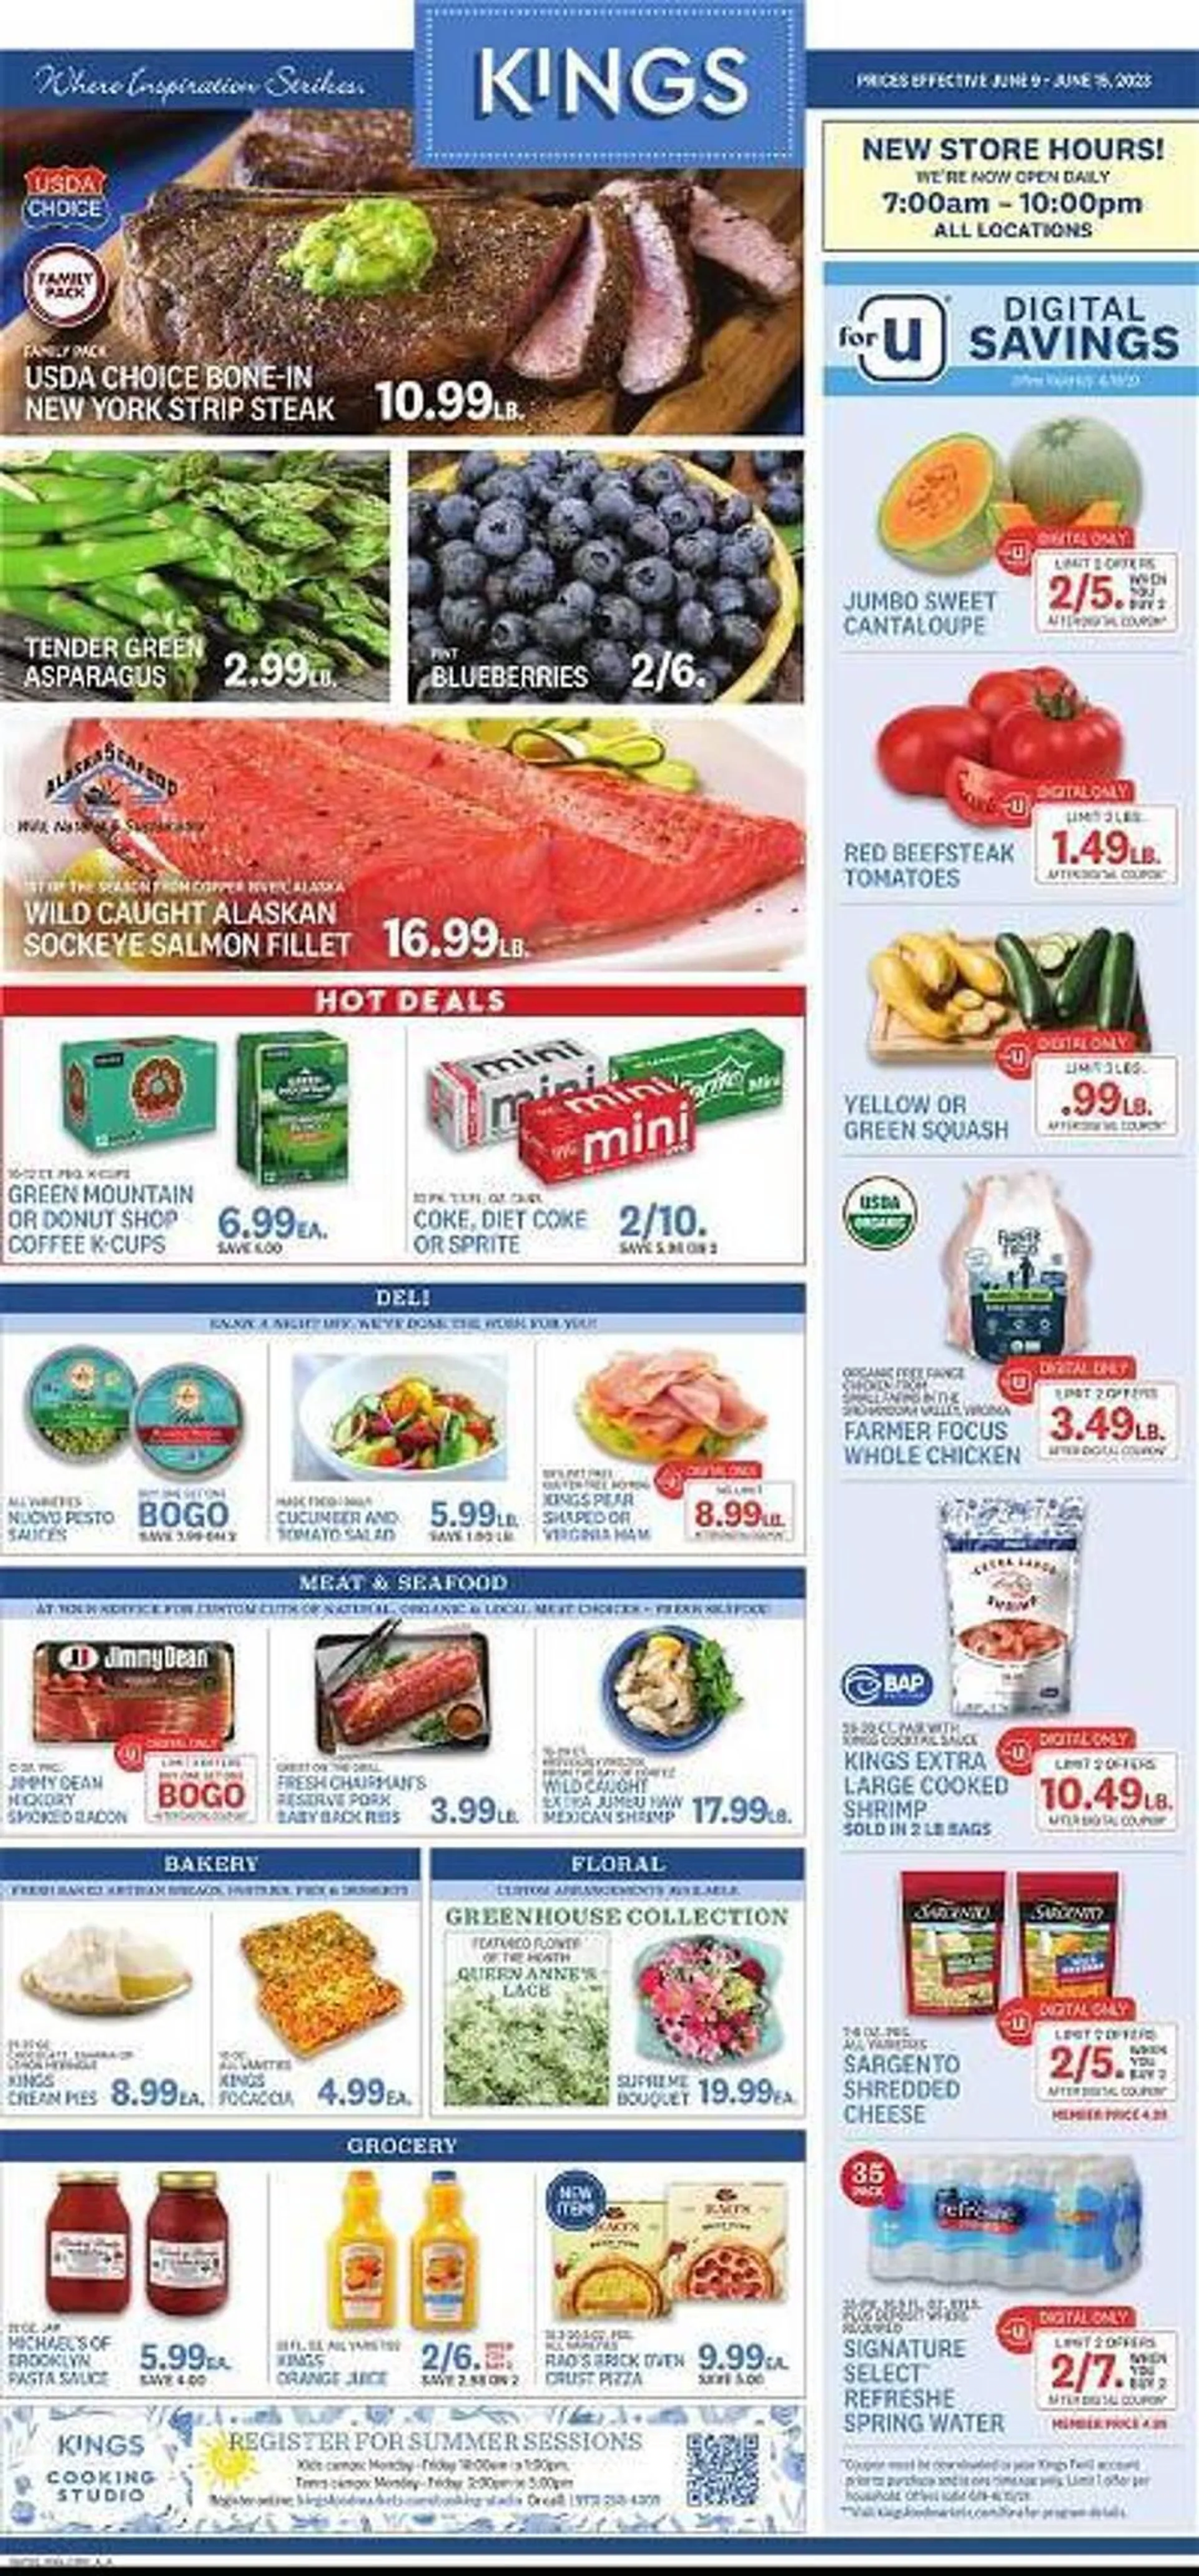 Kings Food Markets ad - 1